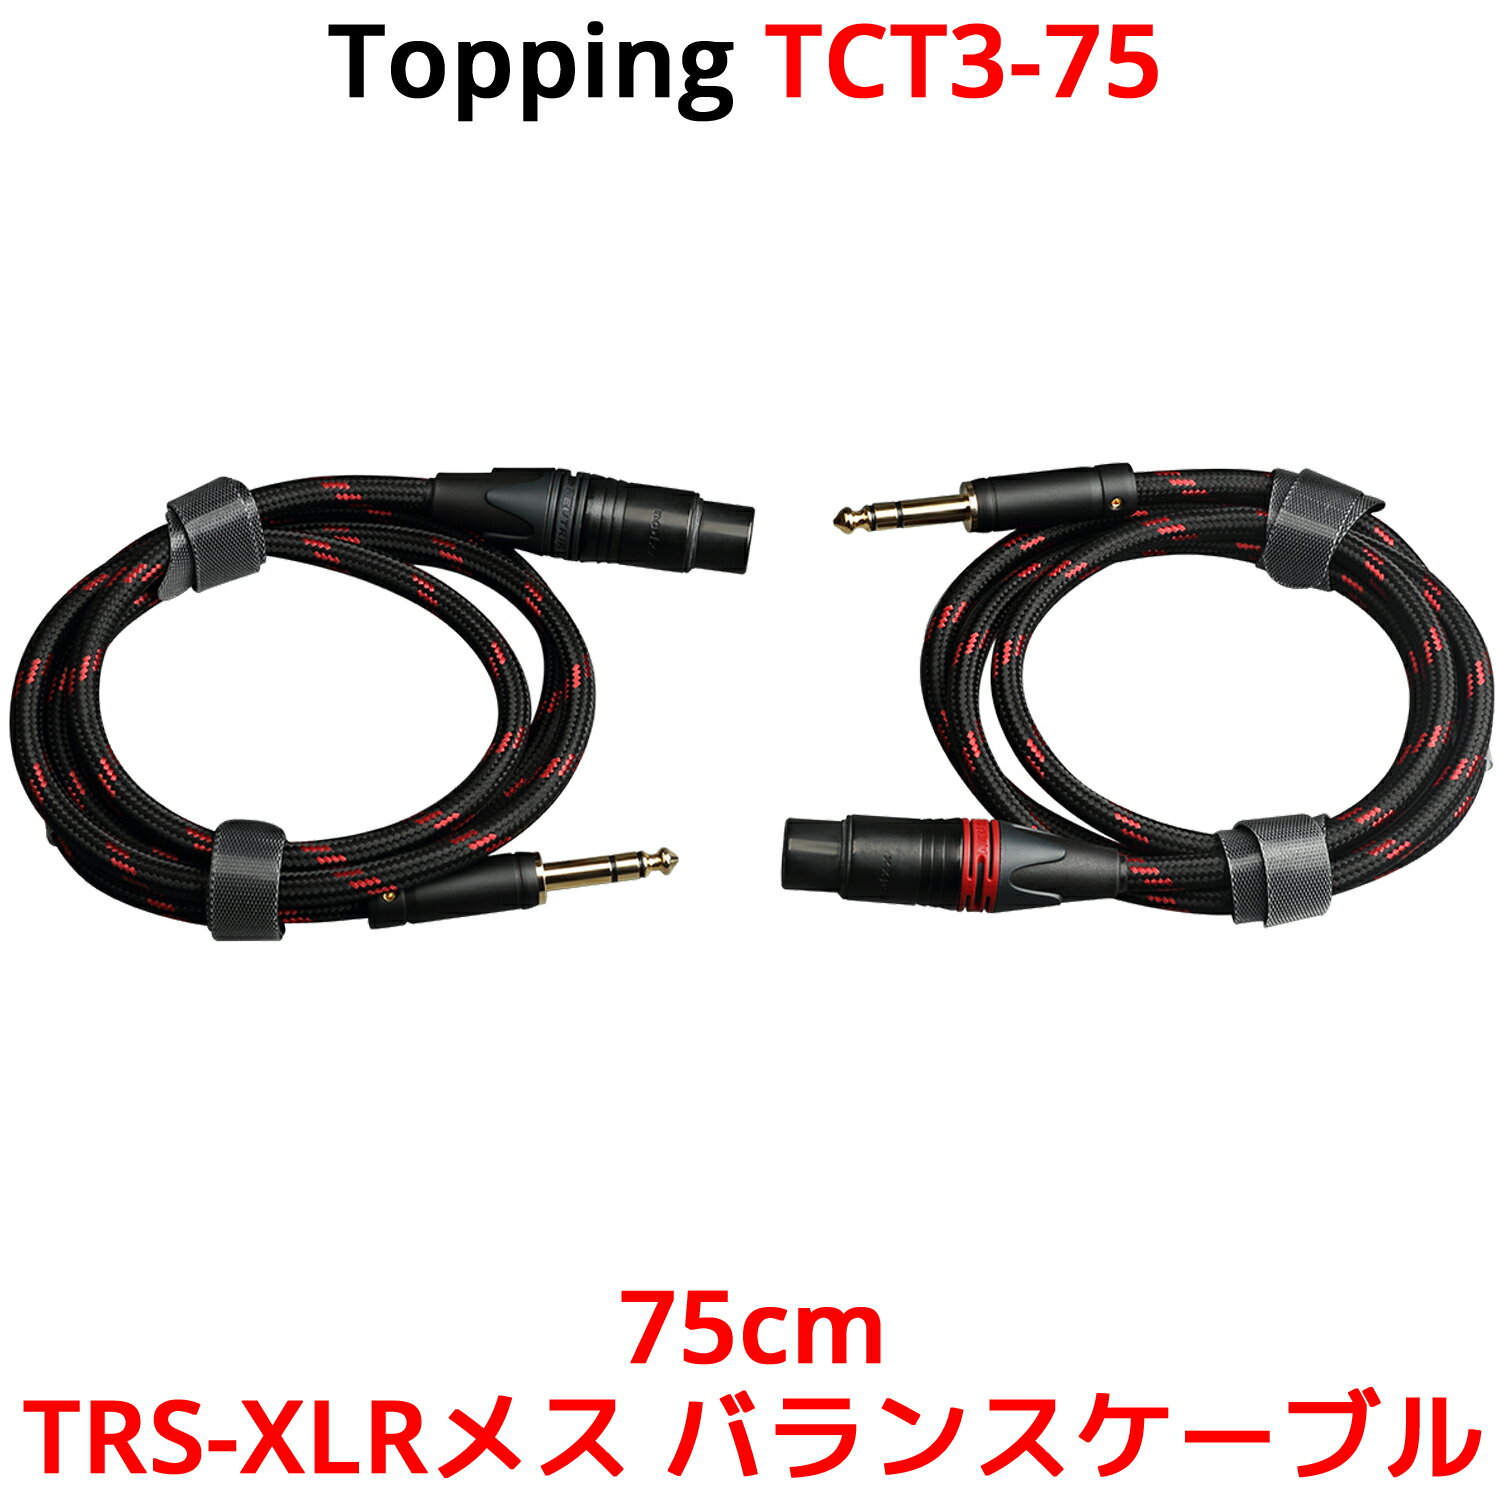 Topping TRS-XLRメス バランスケーブル 75cm 2本セット トッピング TCT3-75 6N単結晶銅 SGP-222 端子 バランス ライン フォン フォーン ケーブル 0.75m オーディオ アンプ DAC ダック ヘッドホンアンプ スピーカー 接続 フルバランス 高音質 TCT3 TRS XLR